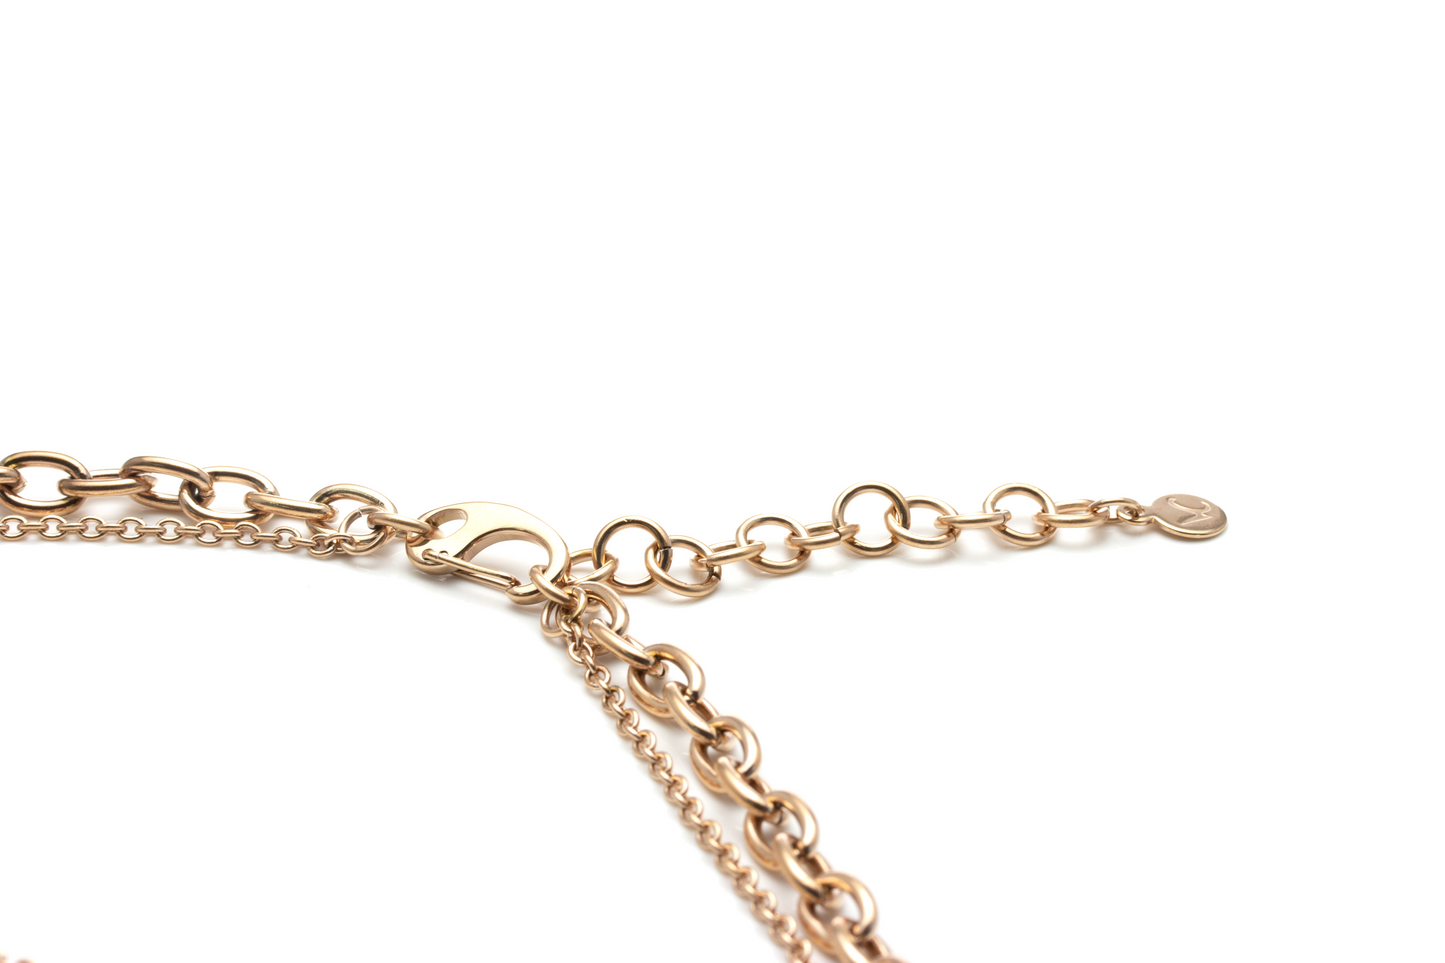 Allora Heart Customize Engraving Double Necklace - Rose Gold